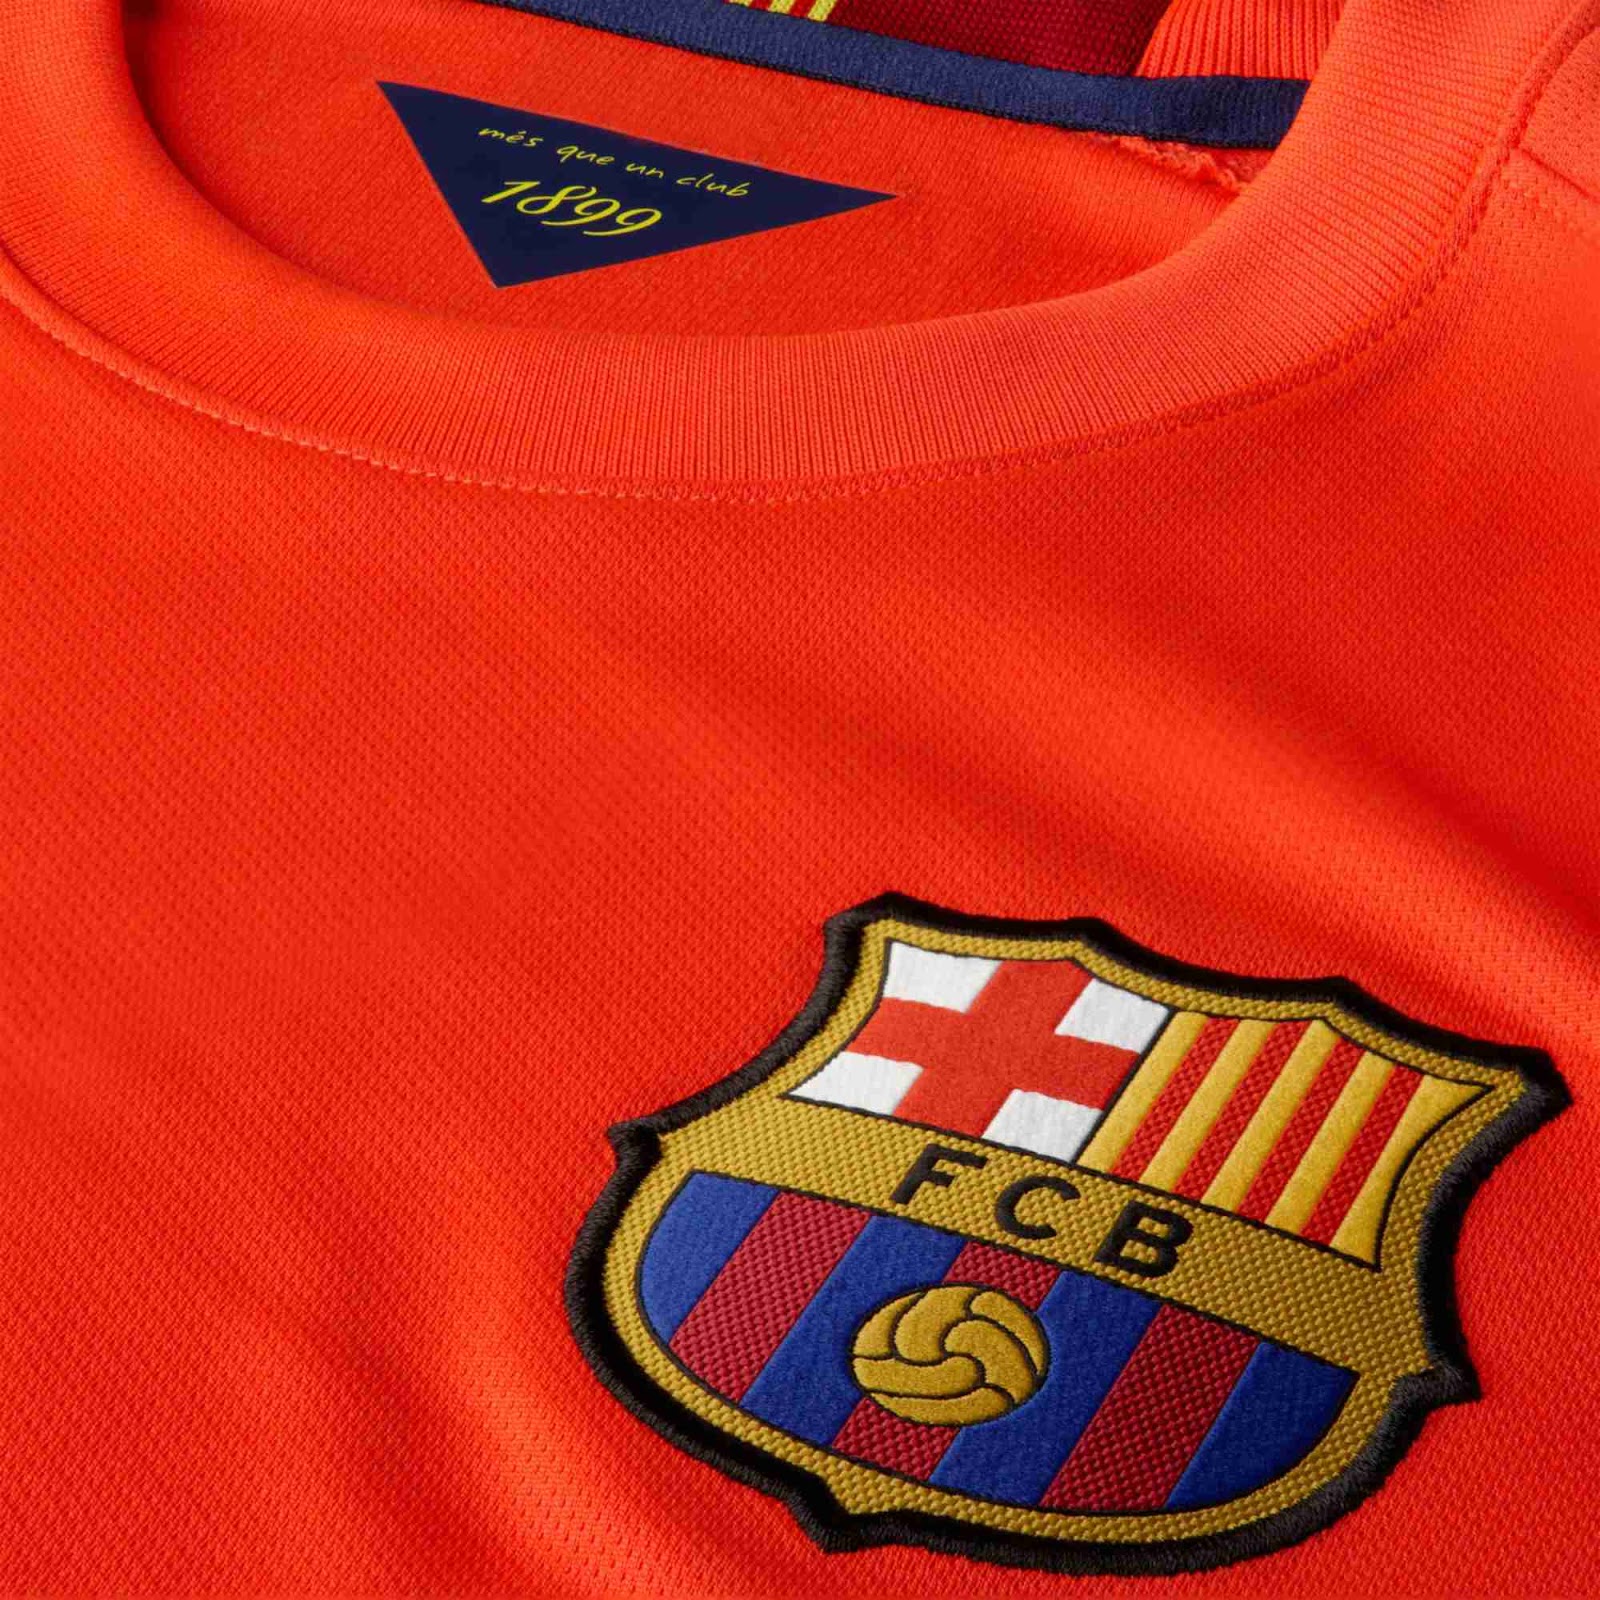 FC Barcelona 14-15 (2014-15) Home, Away and Third Kits - Footy Headlines